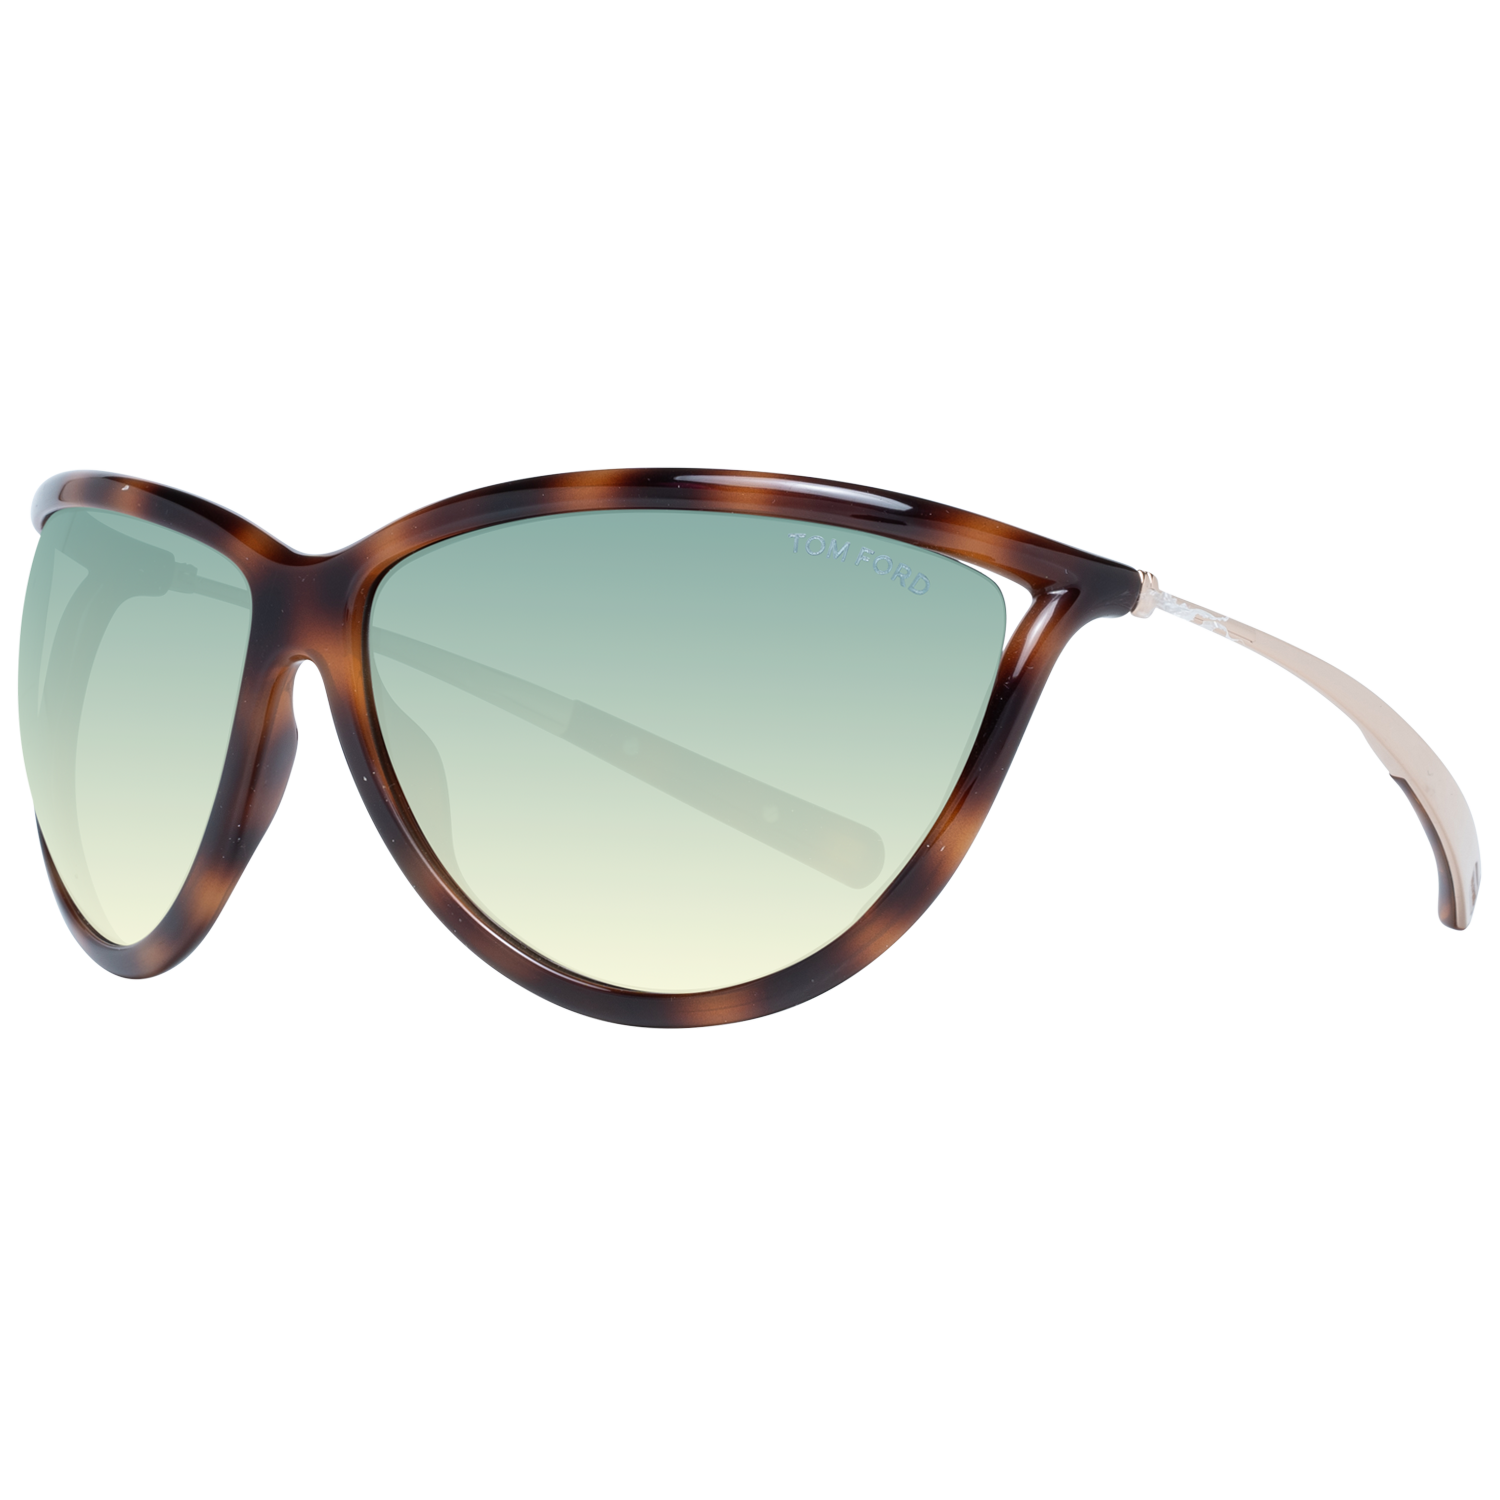 Tom Ford Sunglasses Tom Ford Sunglasses FT0715 01C 68mm Sandrine (Copy) Eyeglasses Eyewear UK USA Australia 